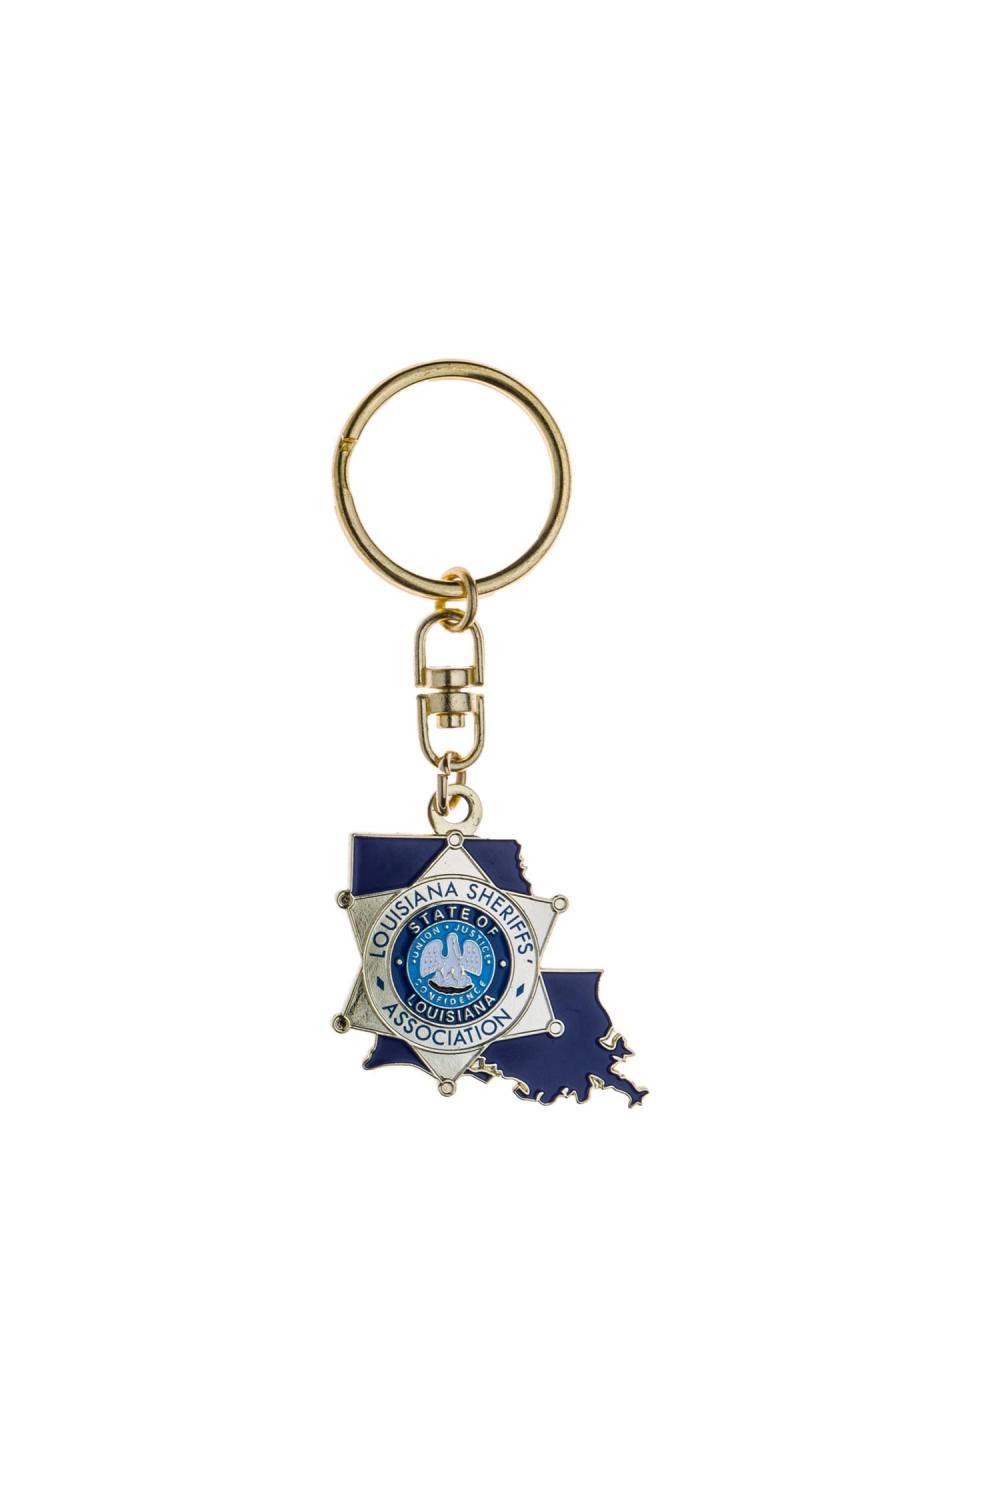 E17211 Louisiana Sheriffs Association - The Emblem Authority